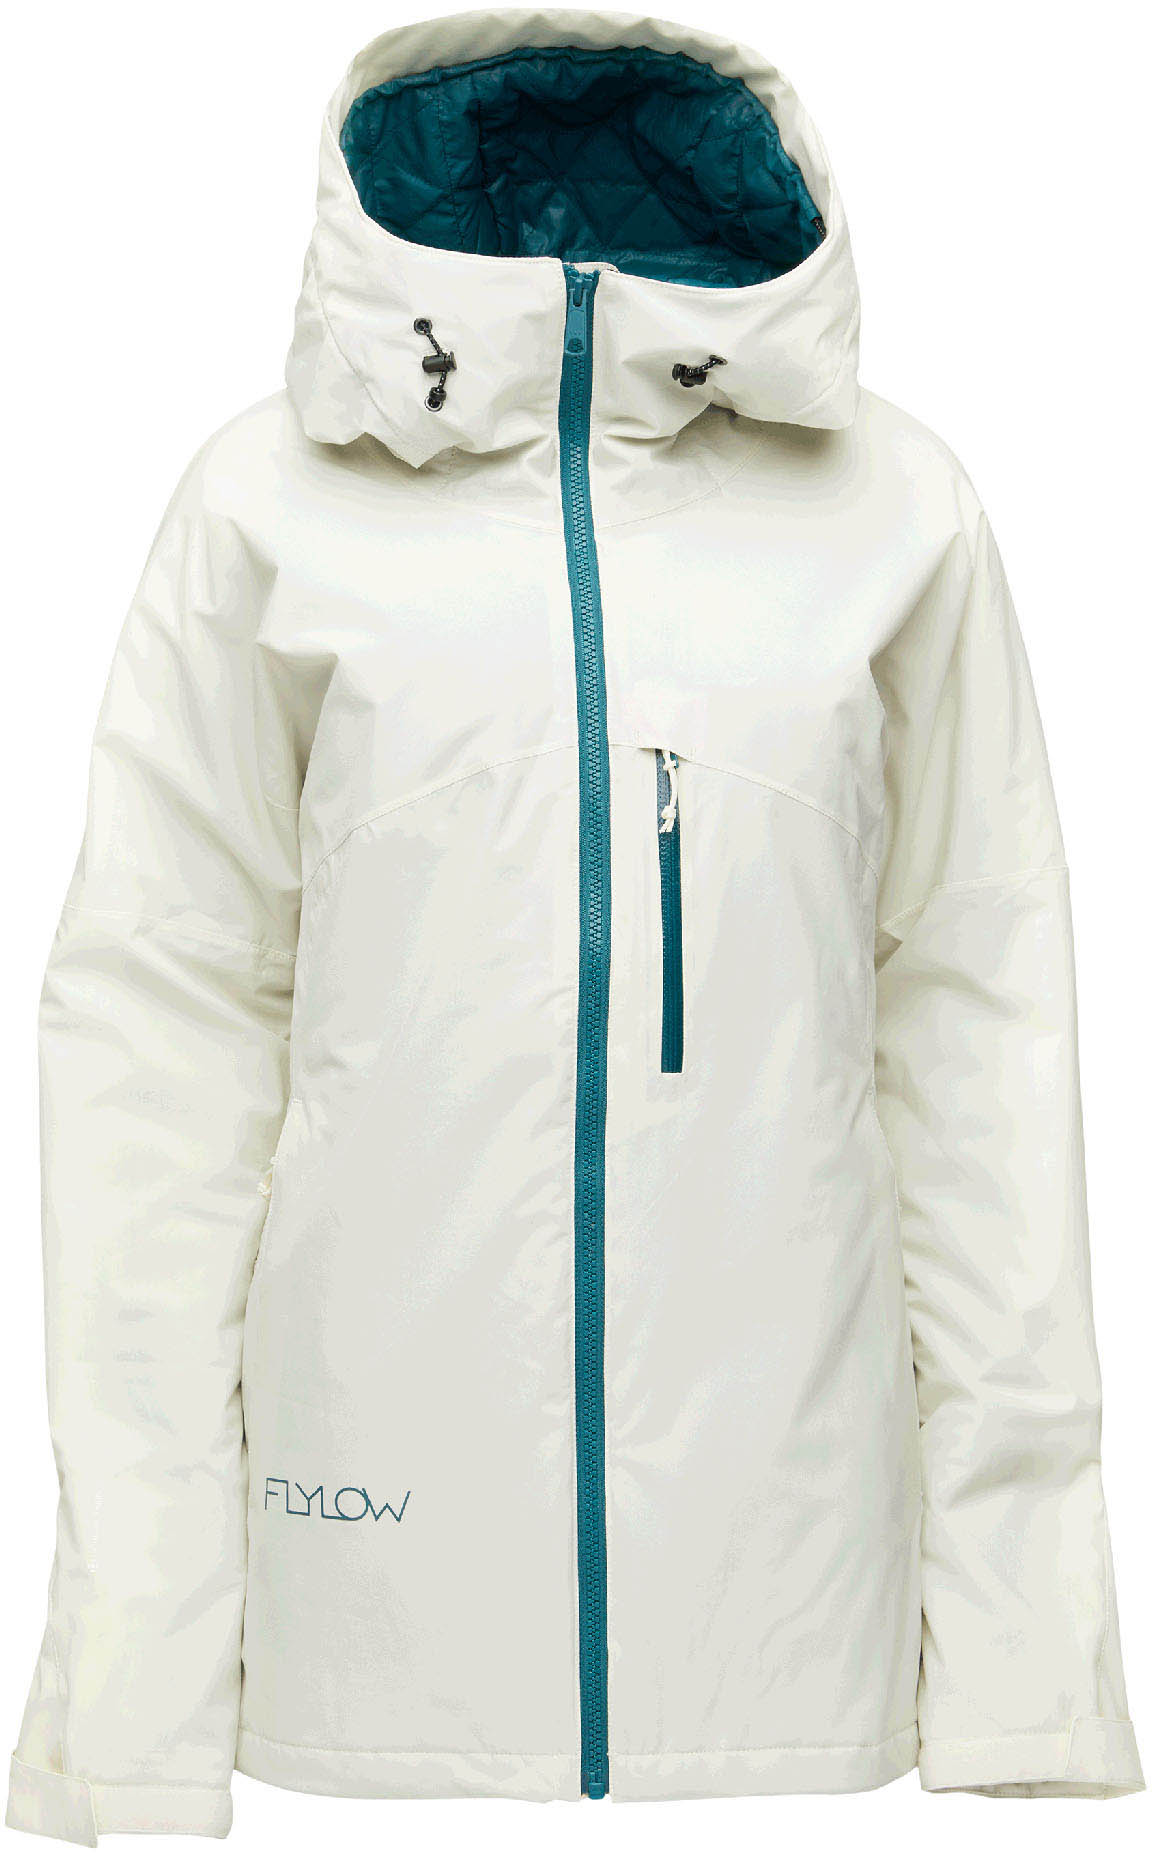 Flylow Sarah Ski Jacket 2020 | Mount Everest